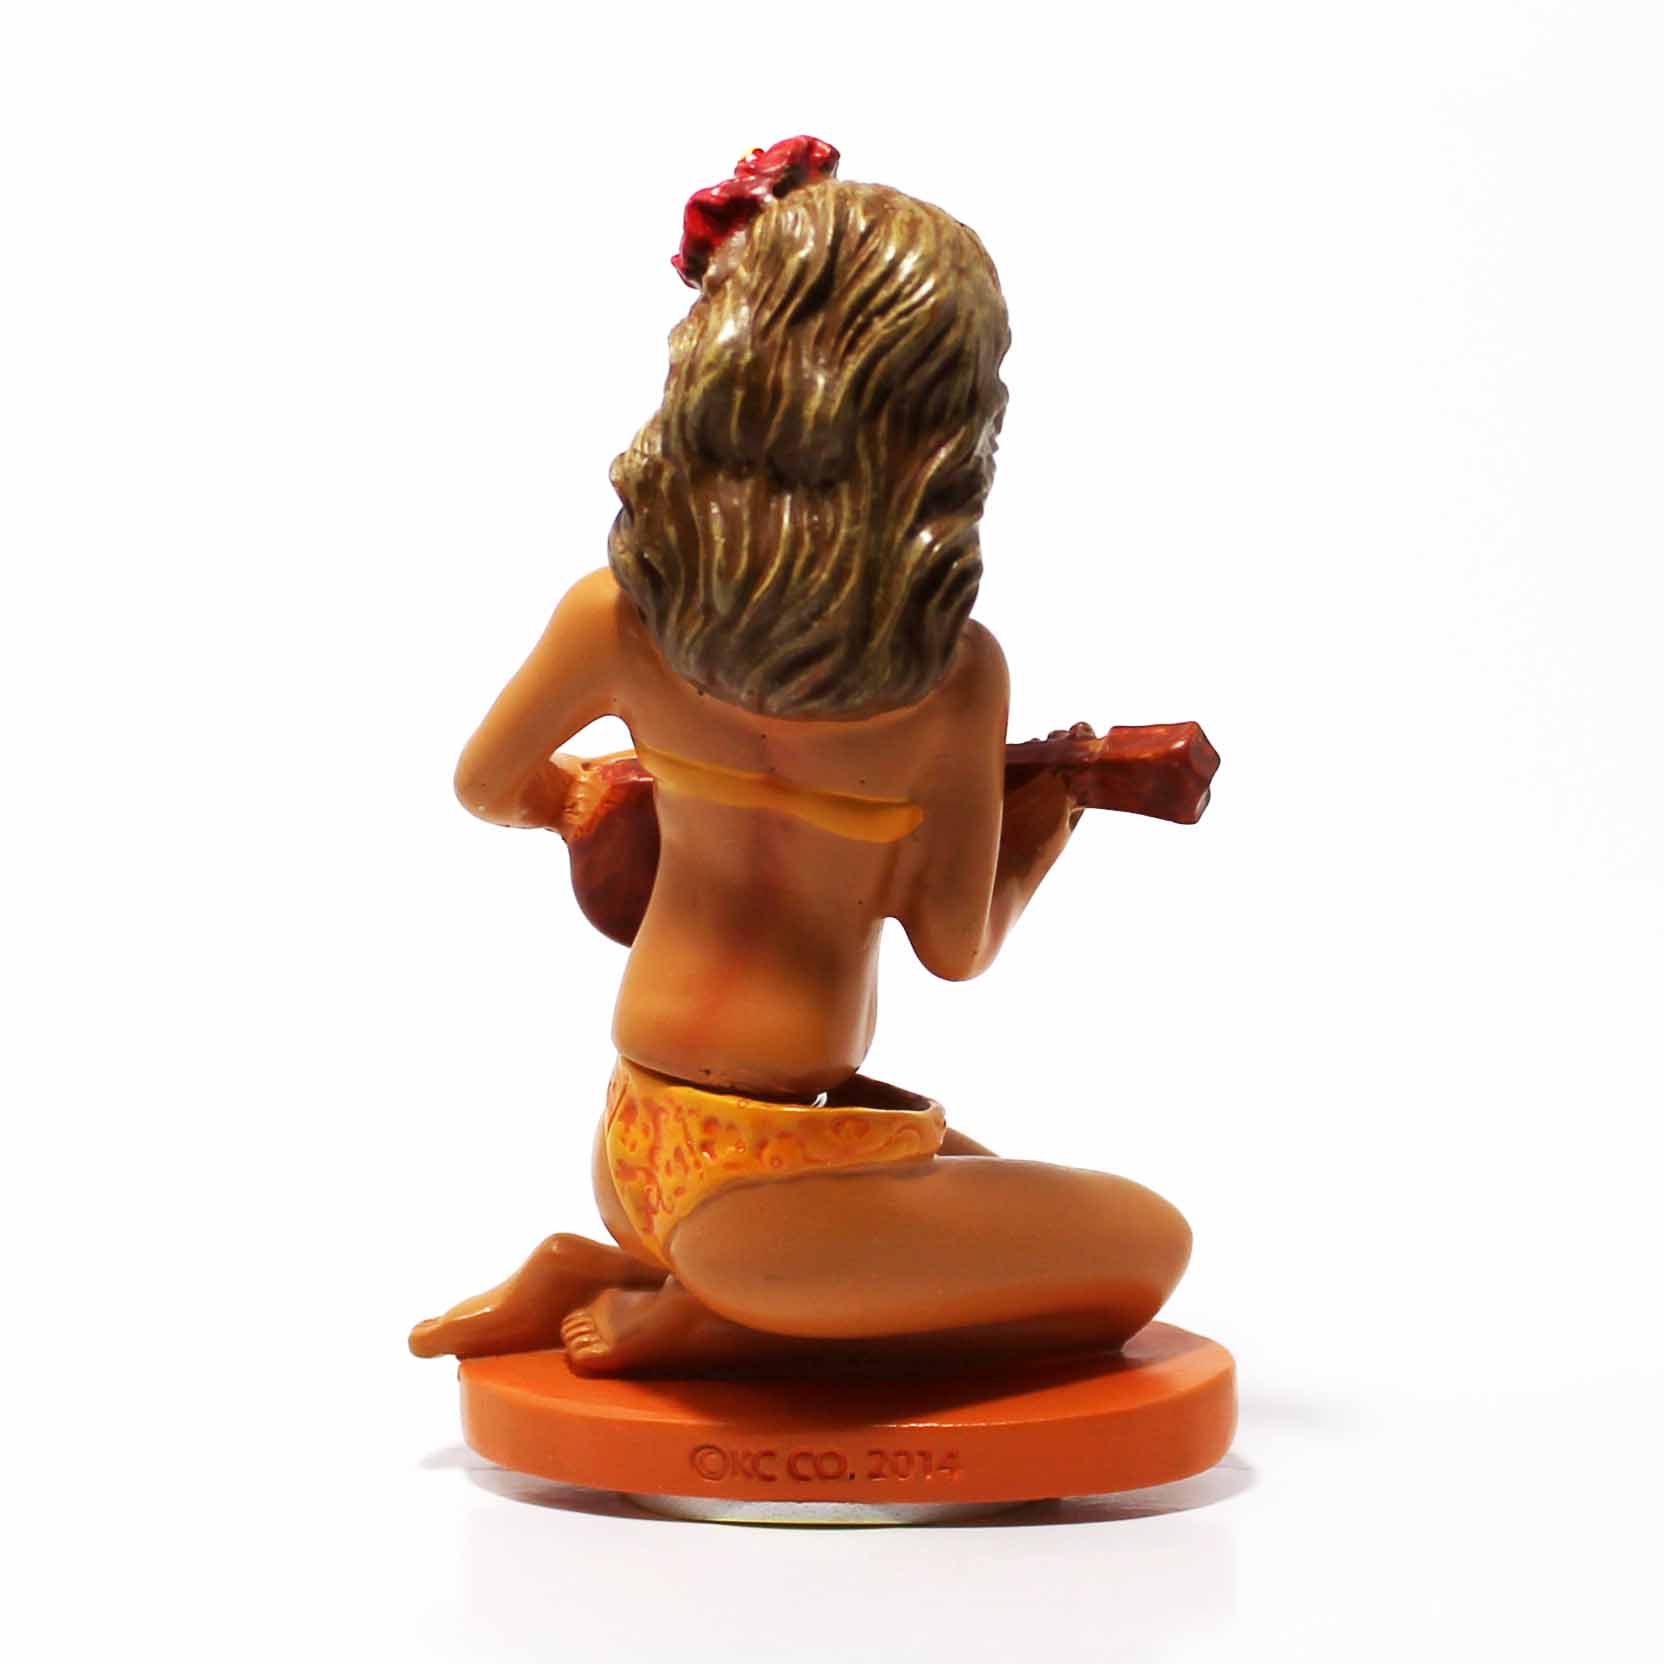 Miniature Dashboard Dolls - Hula Girl sitting pose / Ukulele^CeApi^CeA^l`